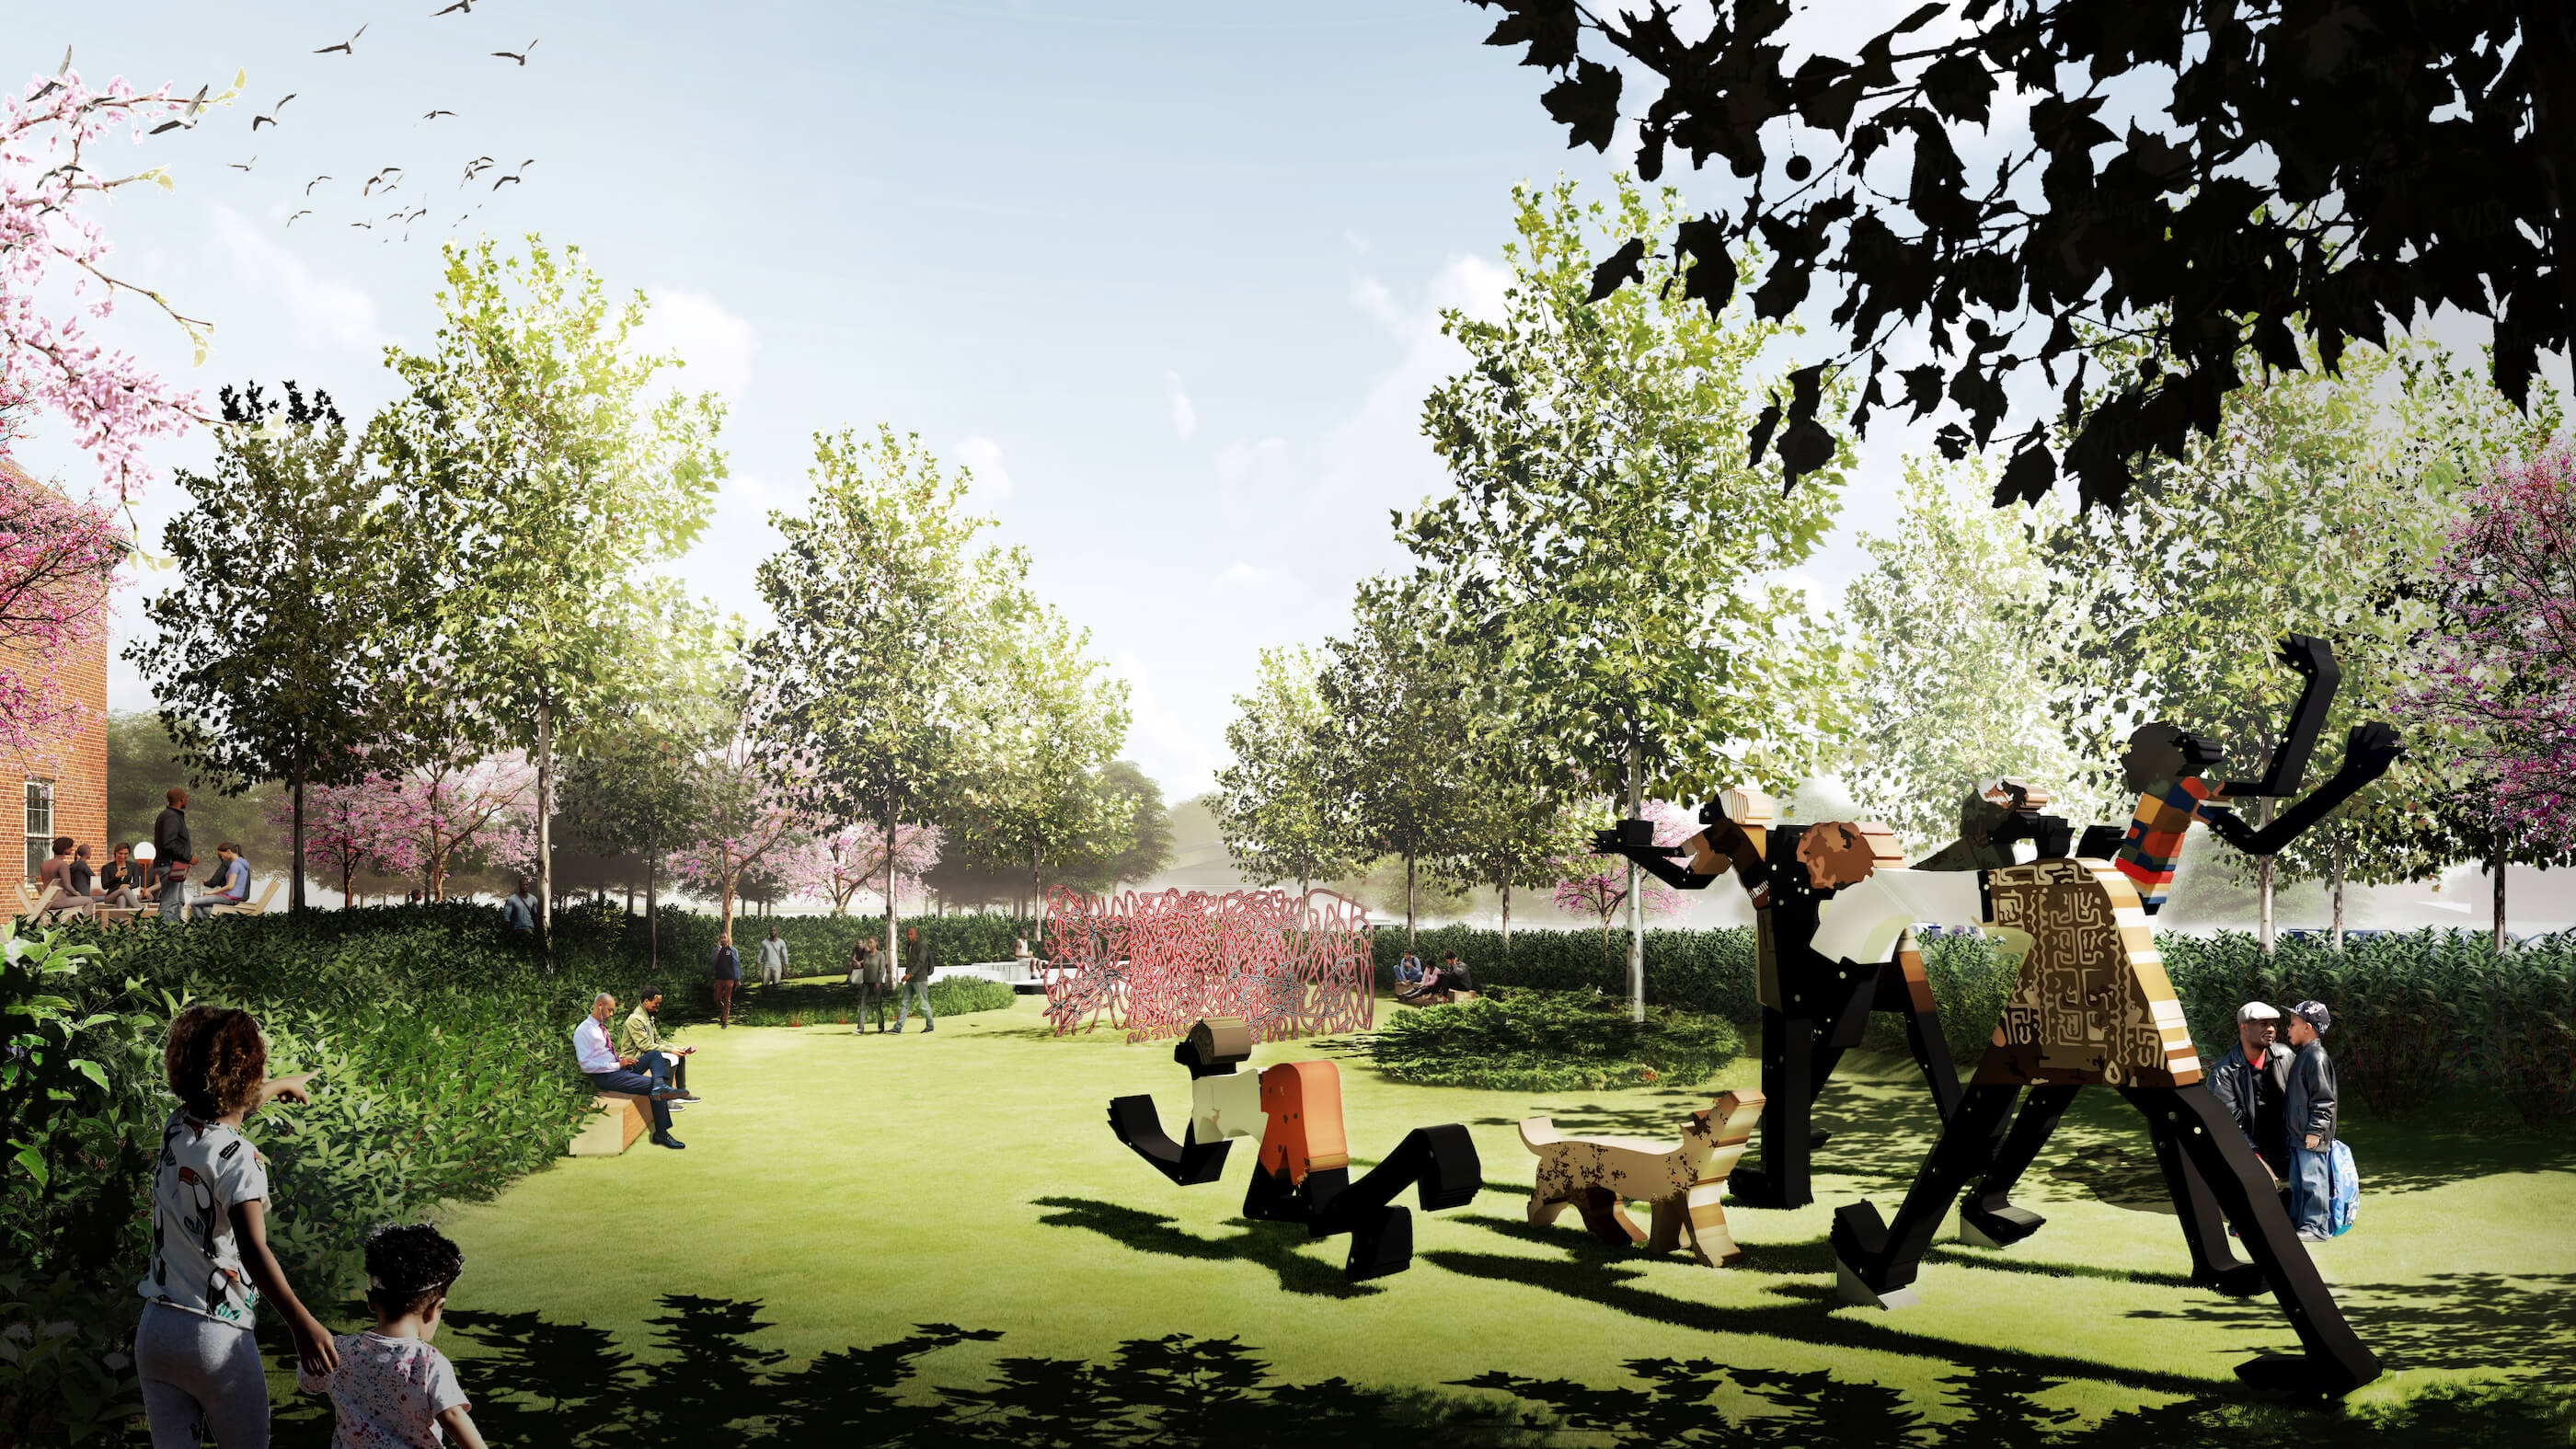 rendering of a sculpture garden